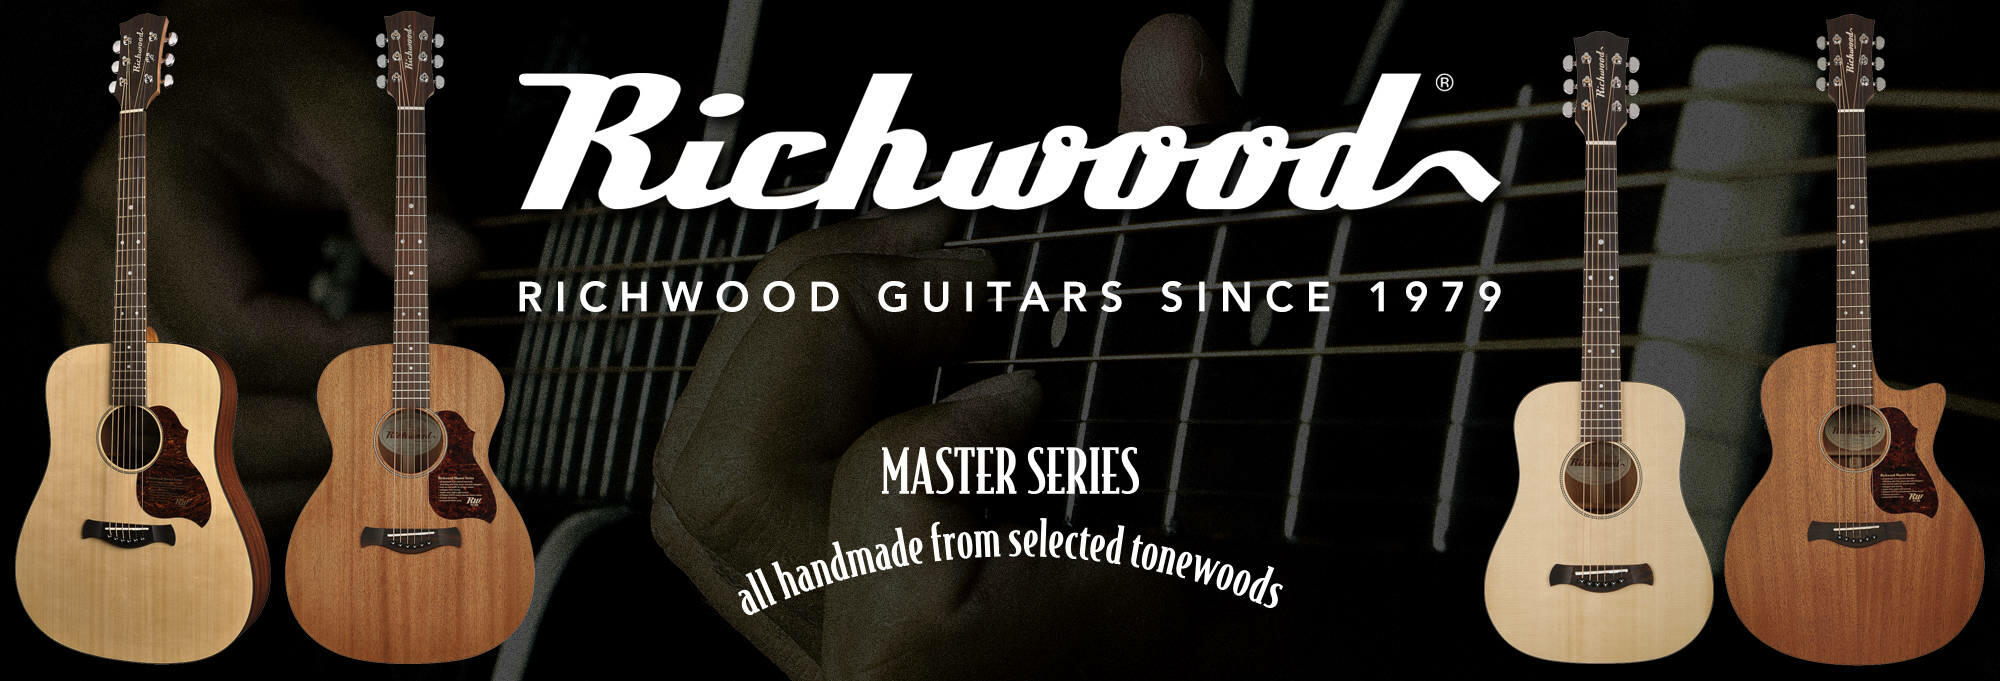 Richwood master series Banner